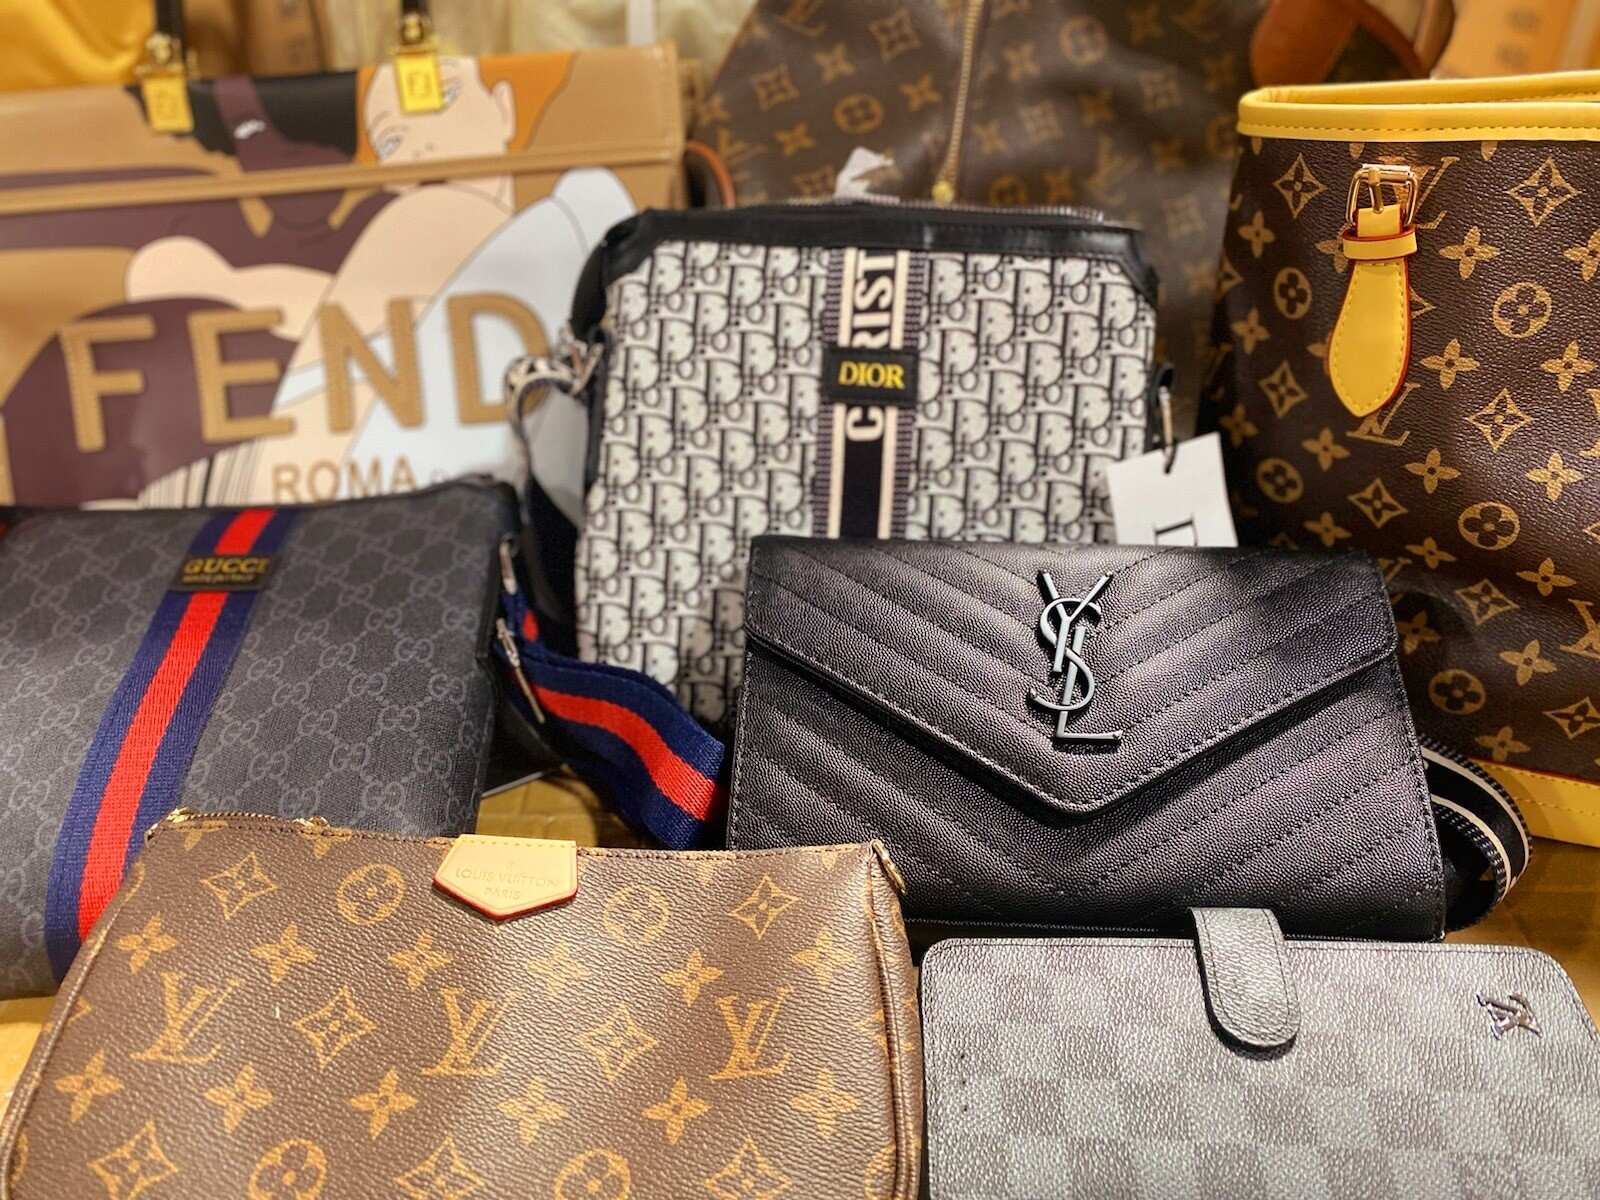 Fake Louis Vuitton Accessories Seized